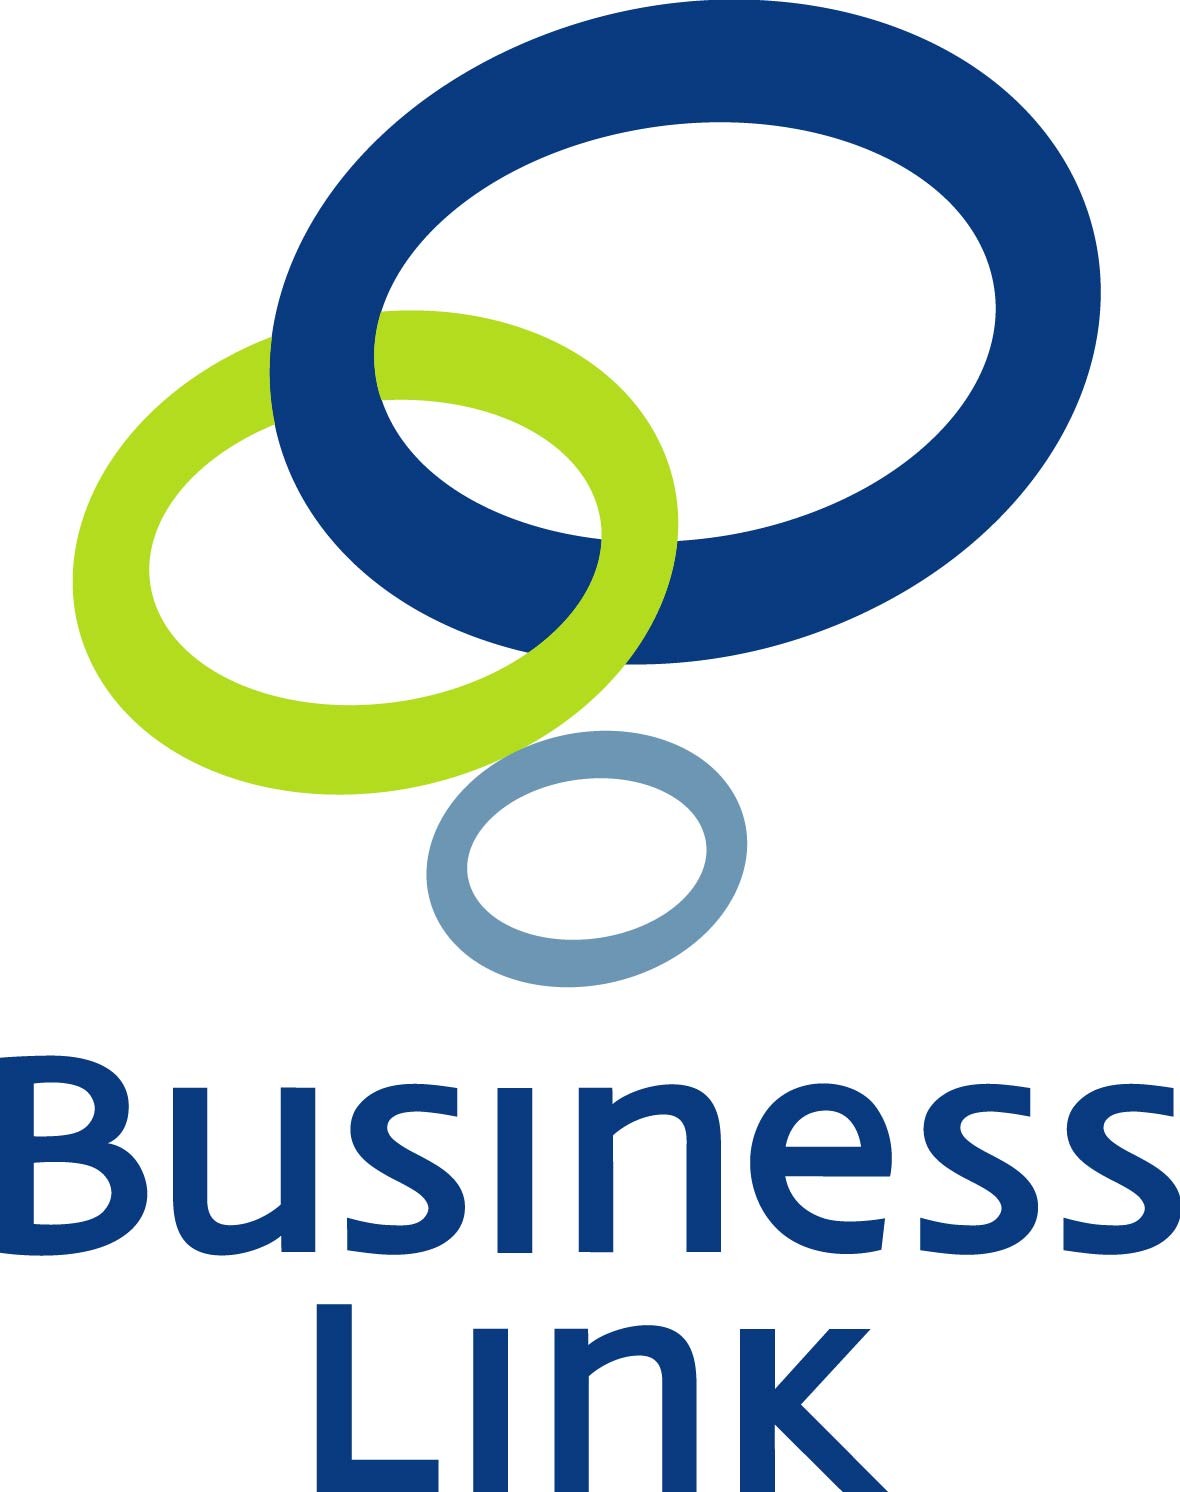 Business Link Logo photo - 1